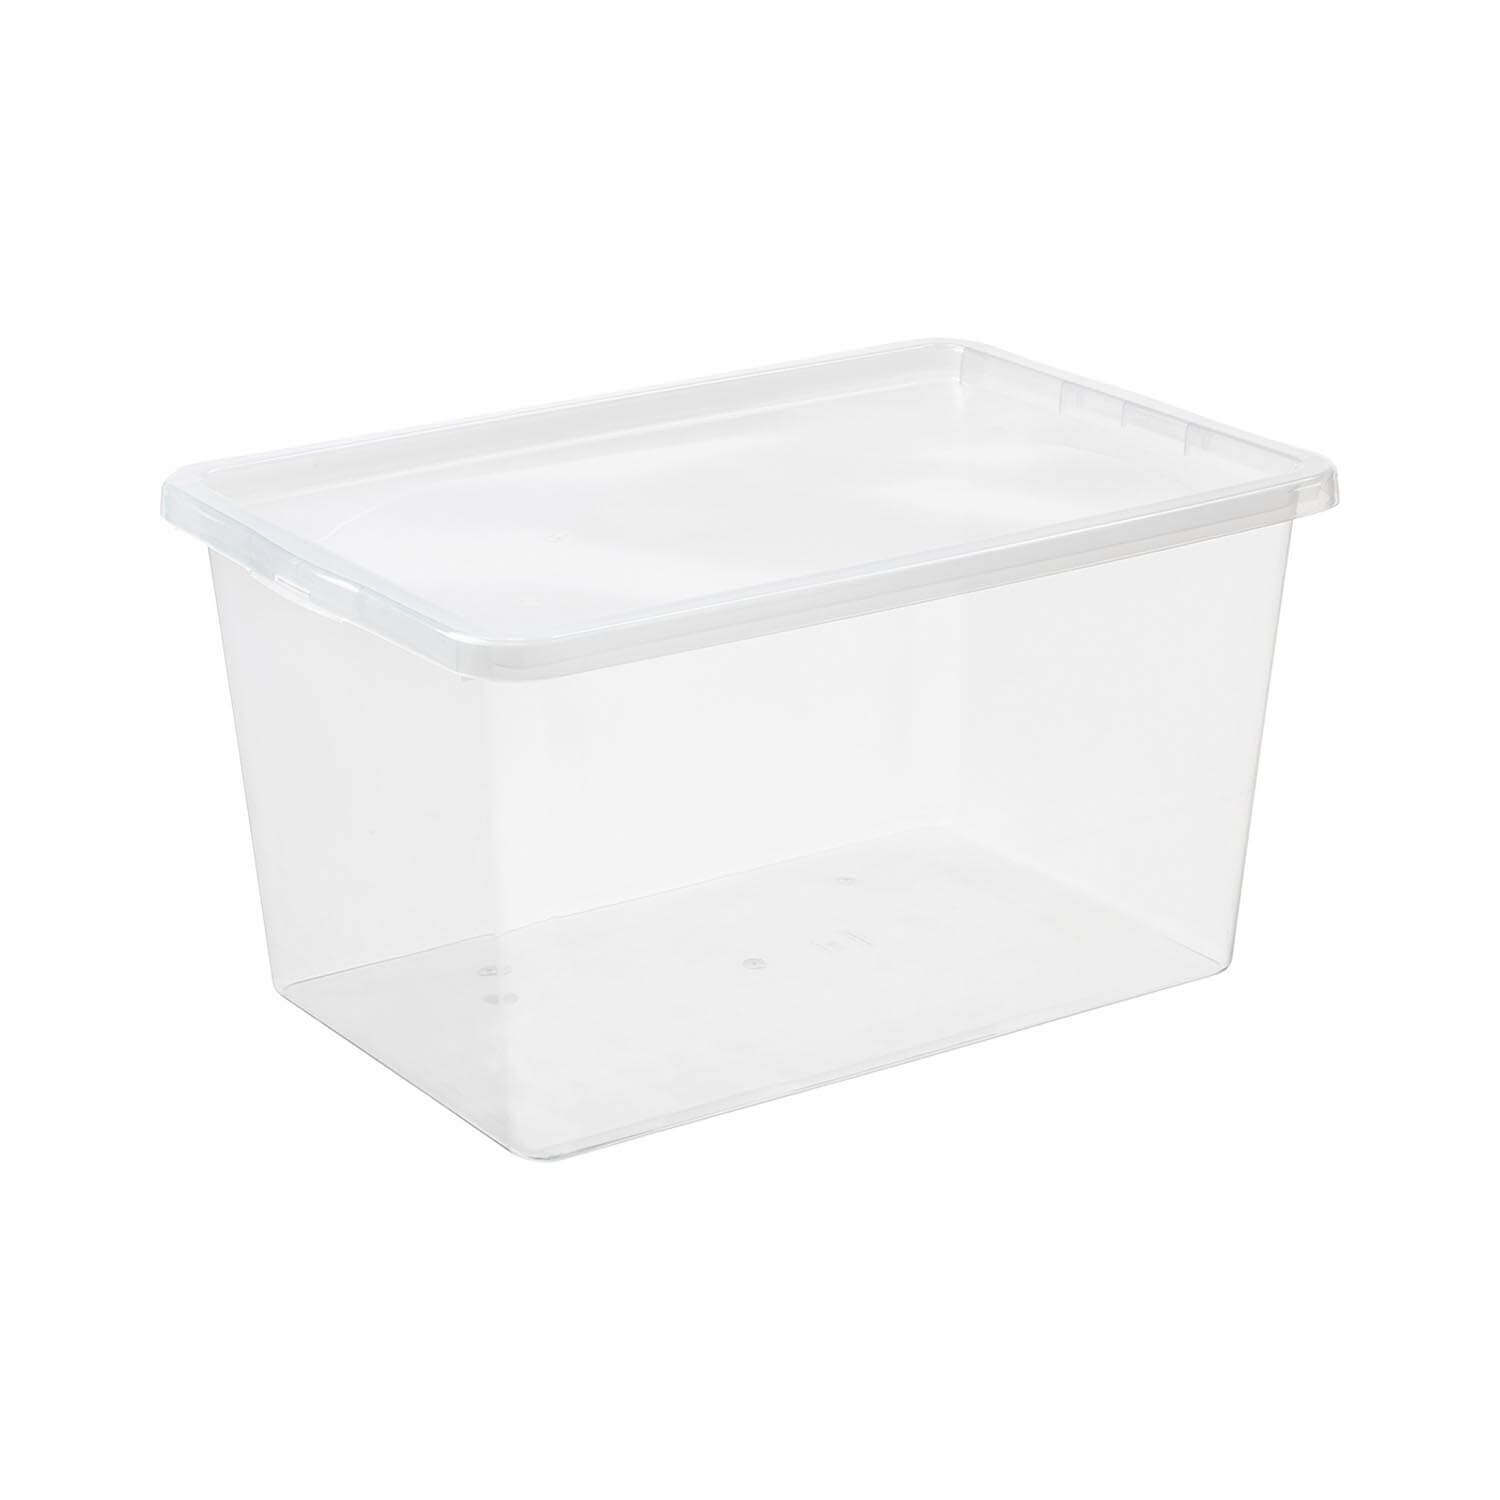 Aufbewahrungsbox "Basic Box" 52 L transparent, stapelbar, Kunststoffbox